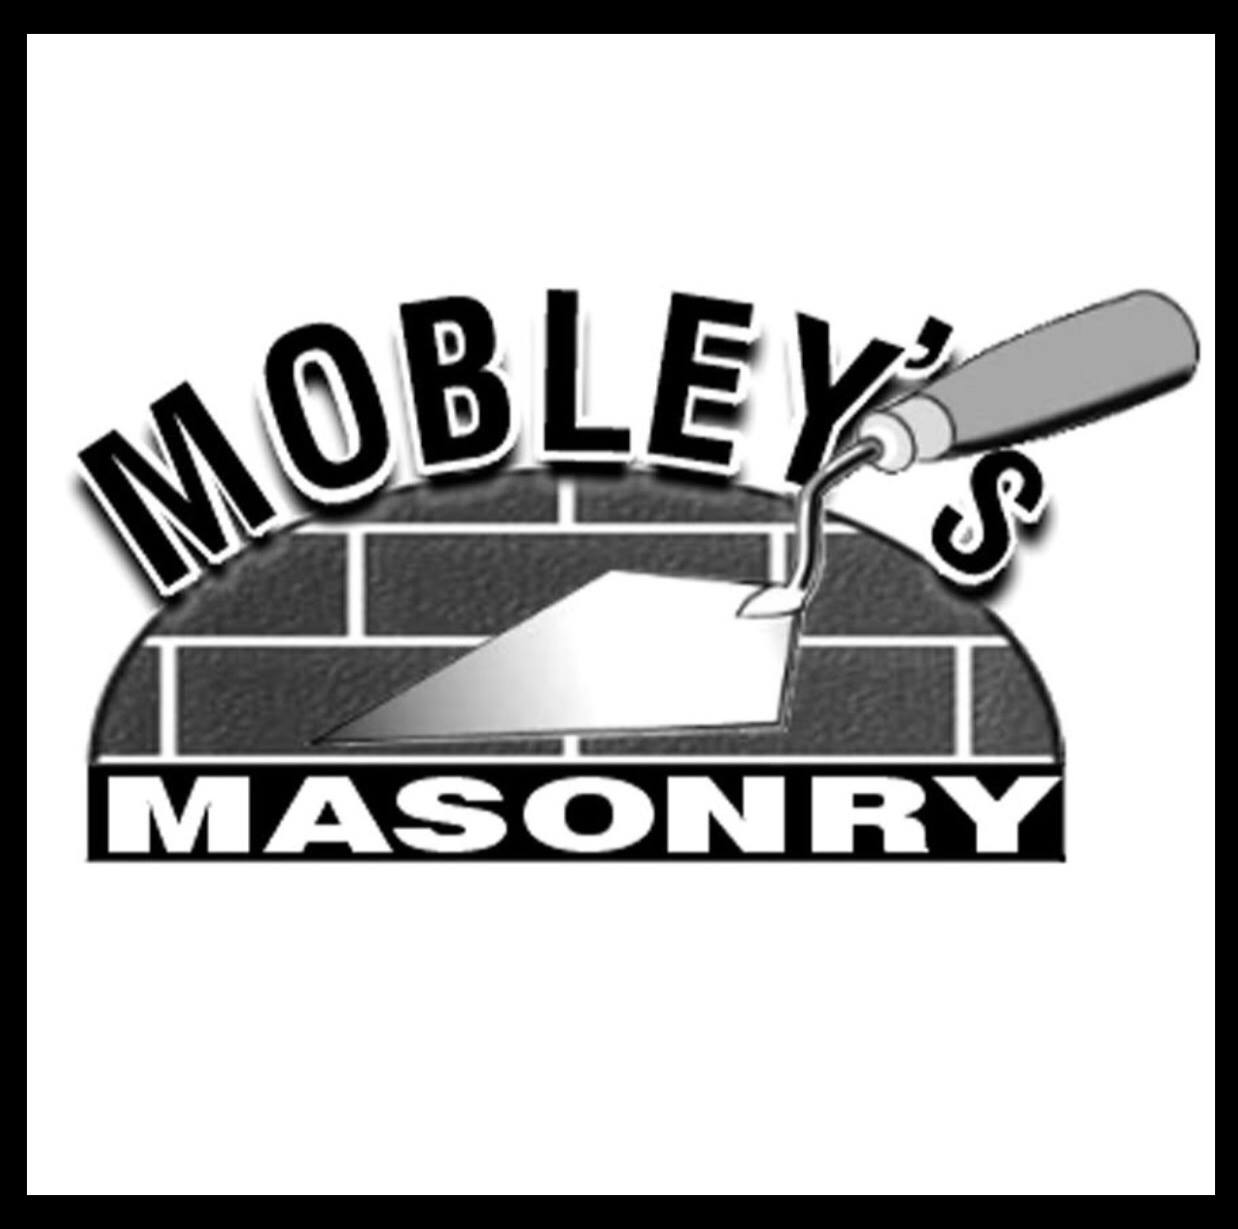 Mobley's Masonry